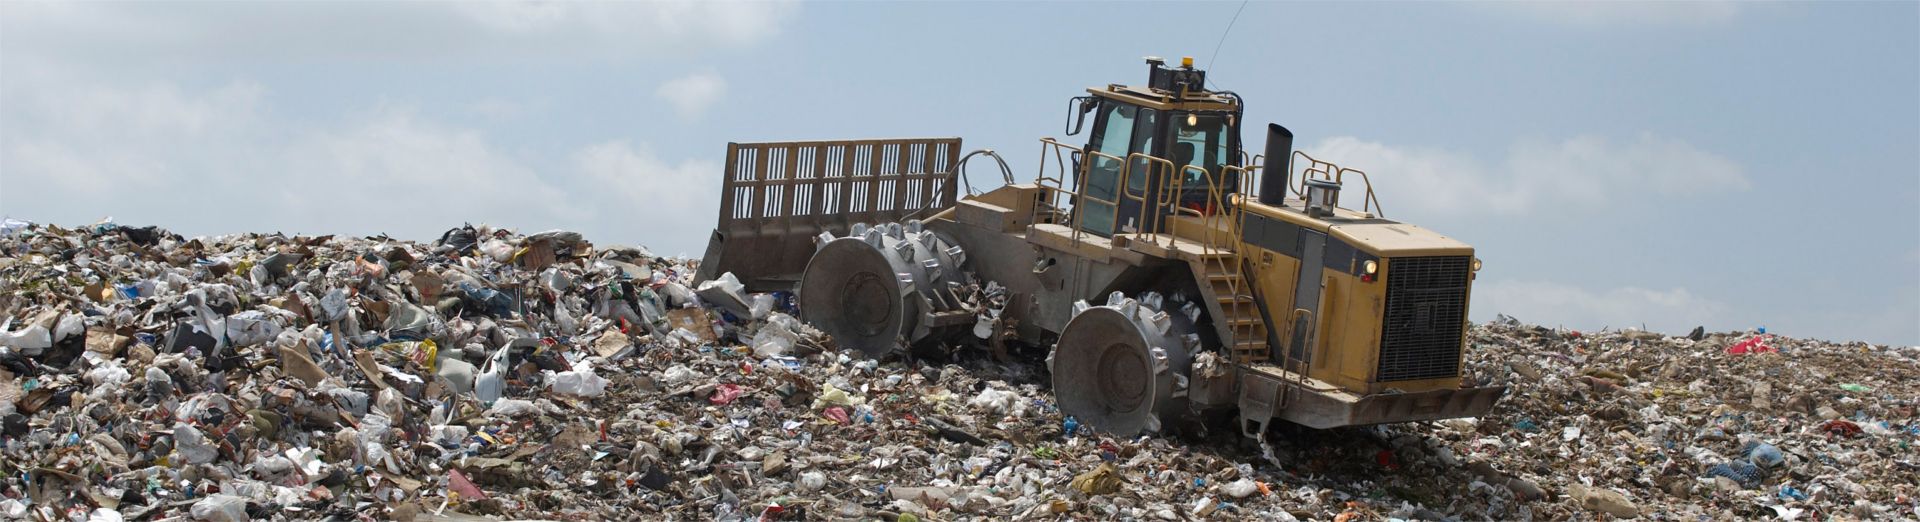 Landfill compactor in a landfill